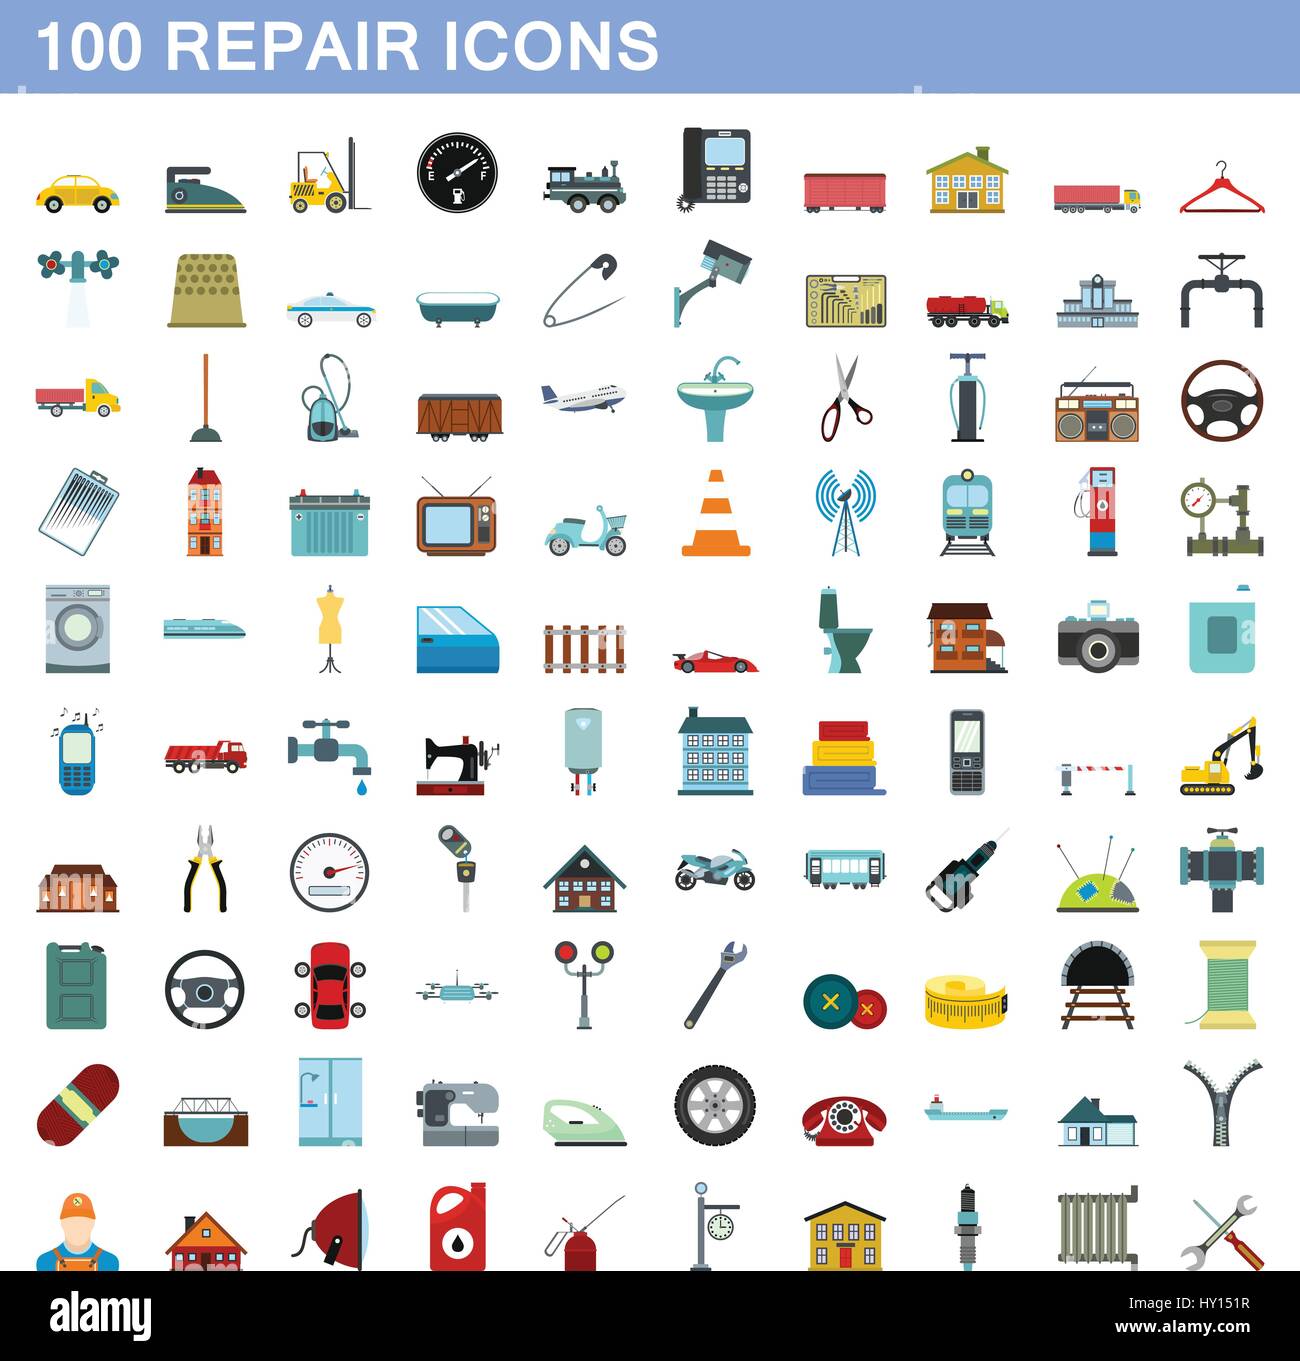 100 repair icons set, flat style Stock Vector